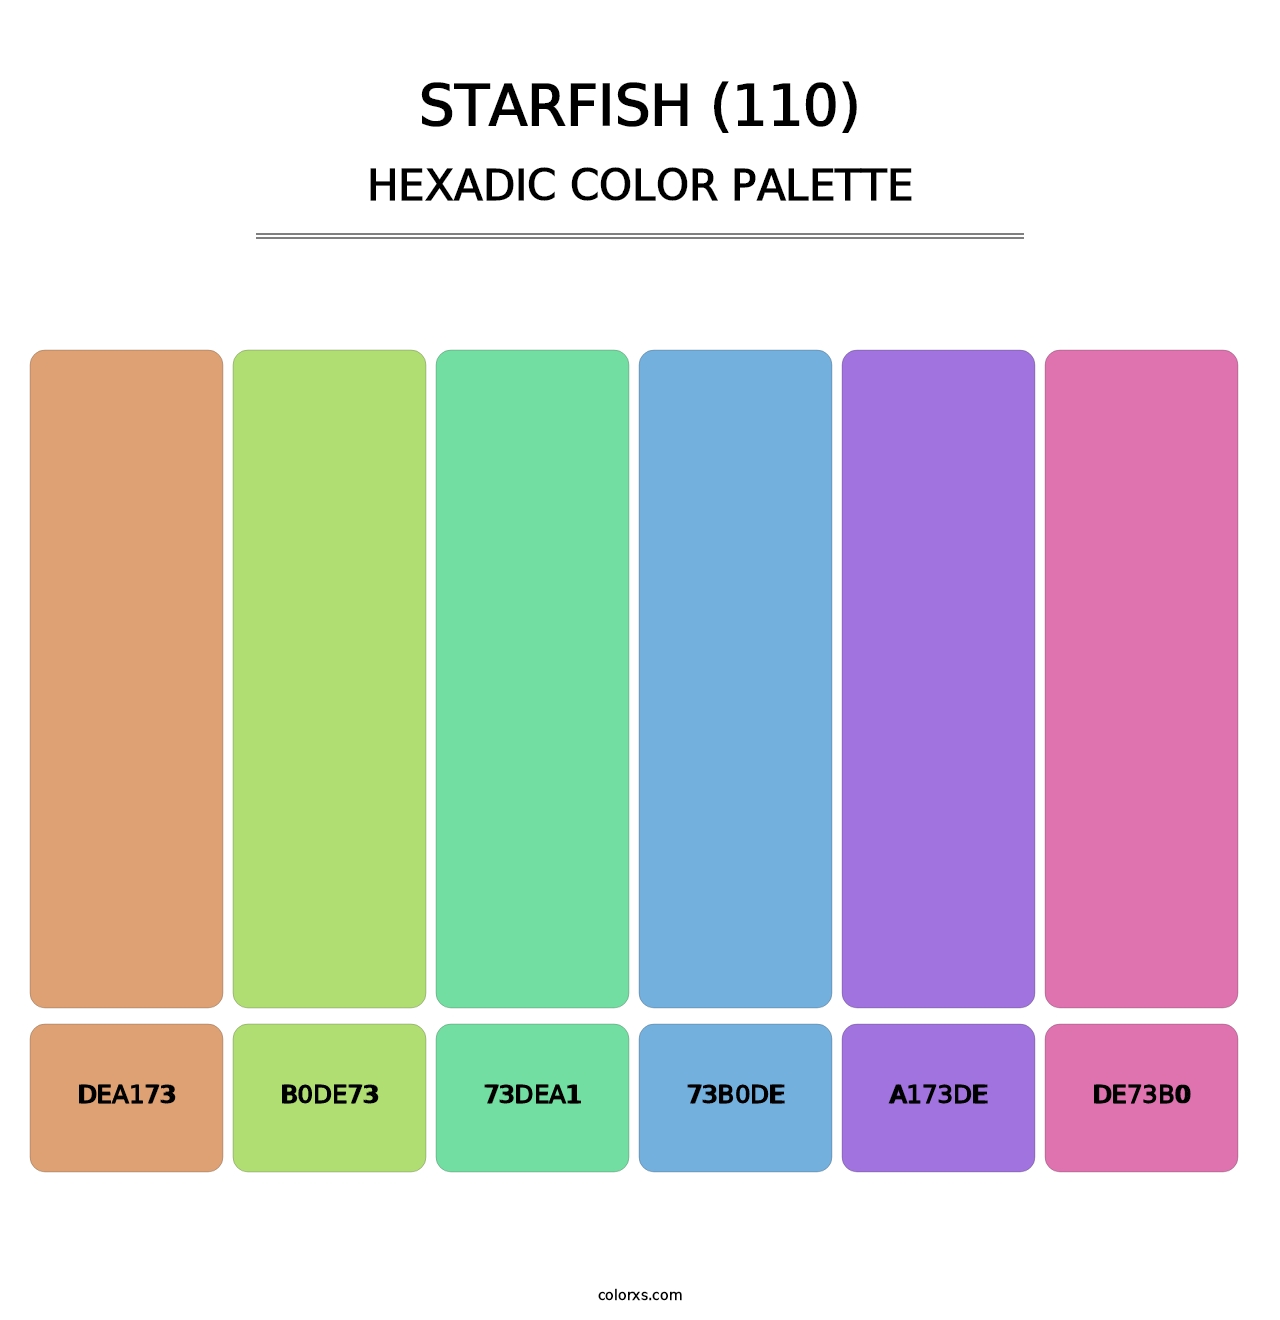 Starfish (110) - Hexadic Color Palette